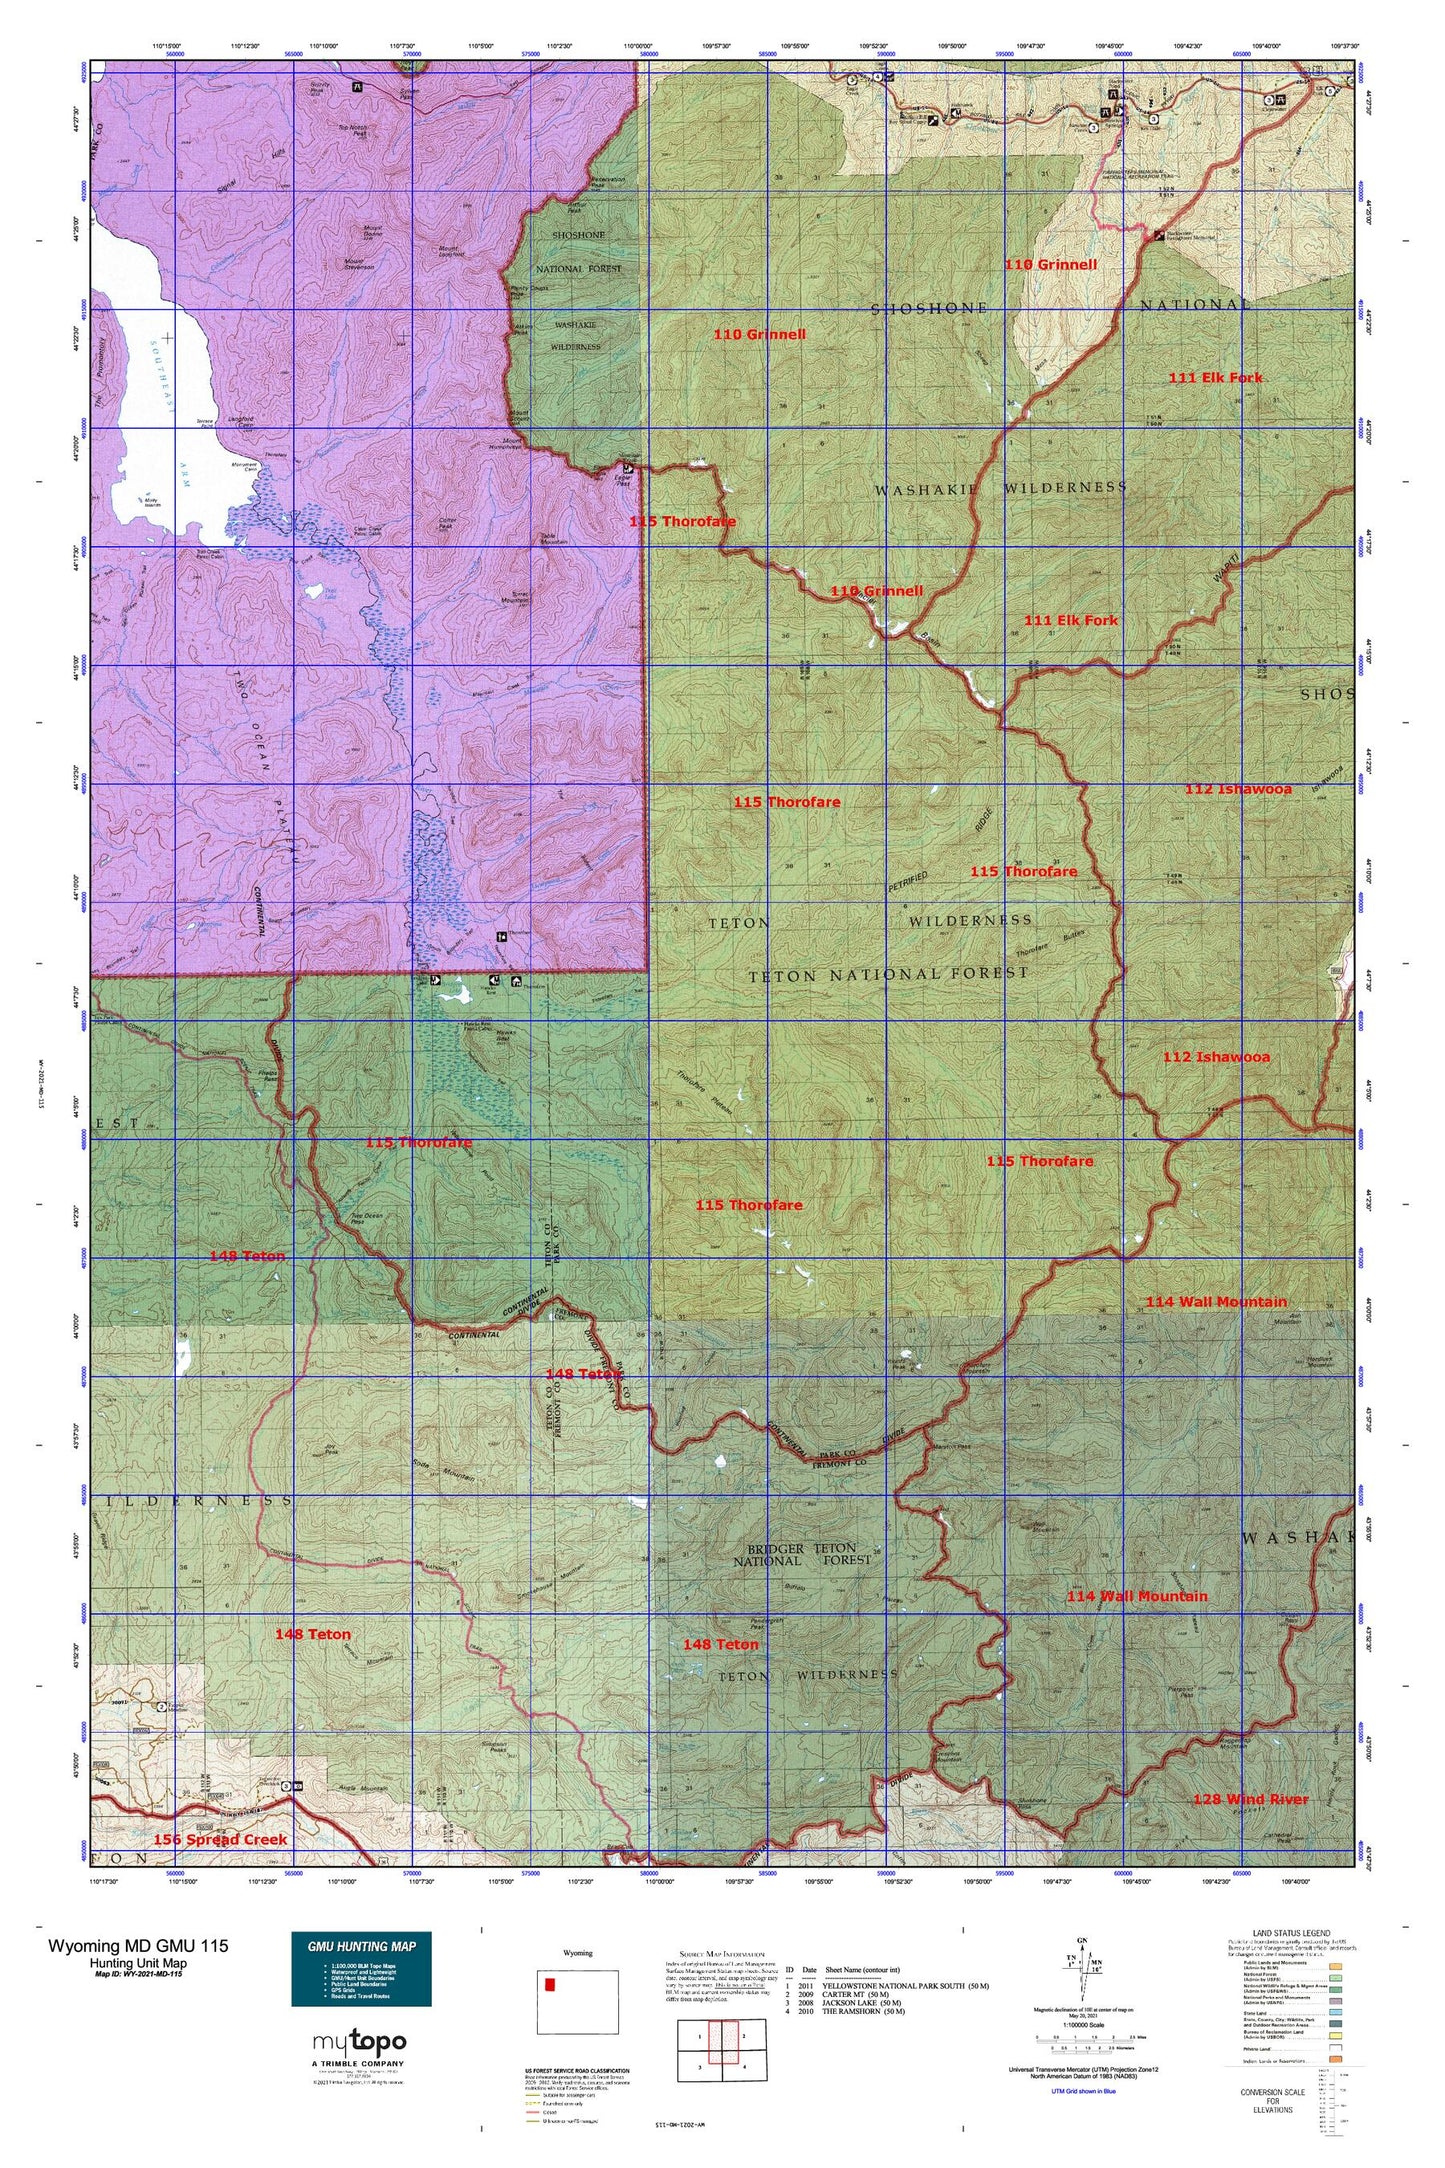 Wyoming Mule Deer GMU 115 Map Image